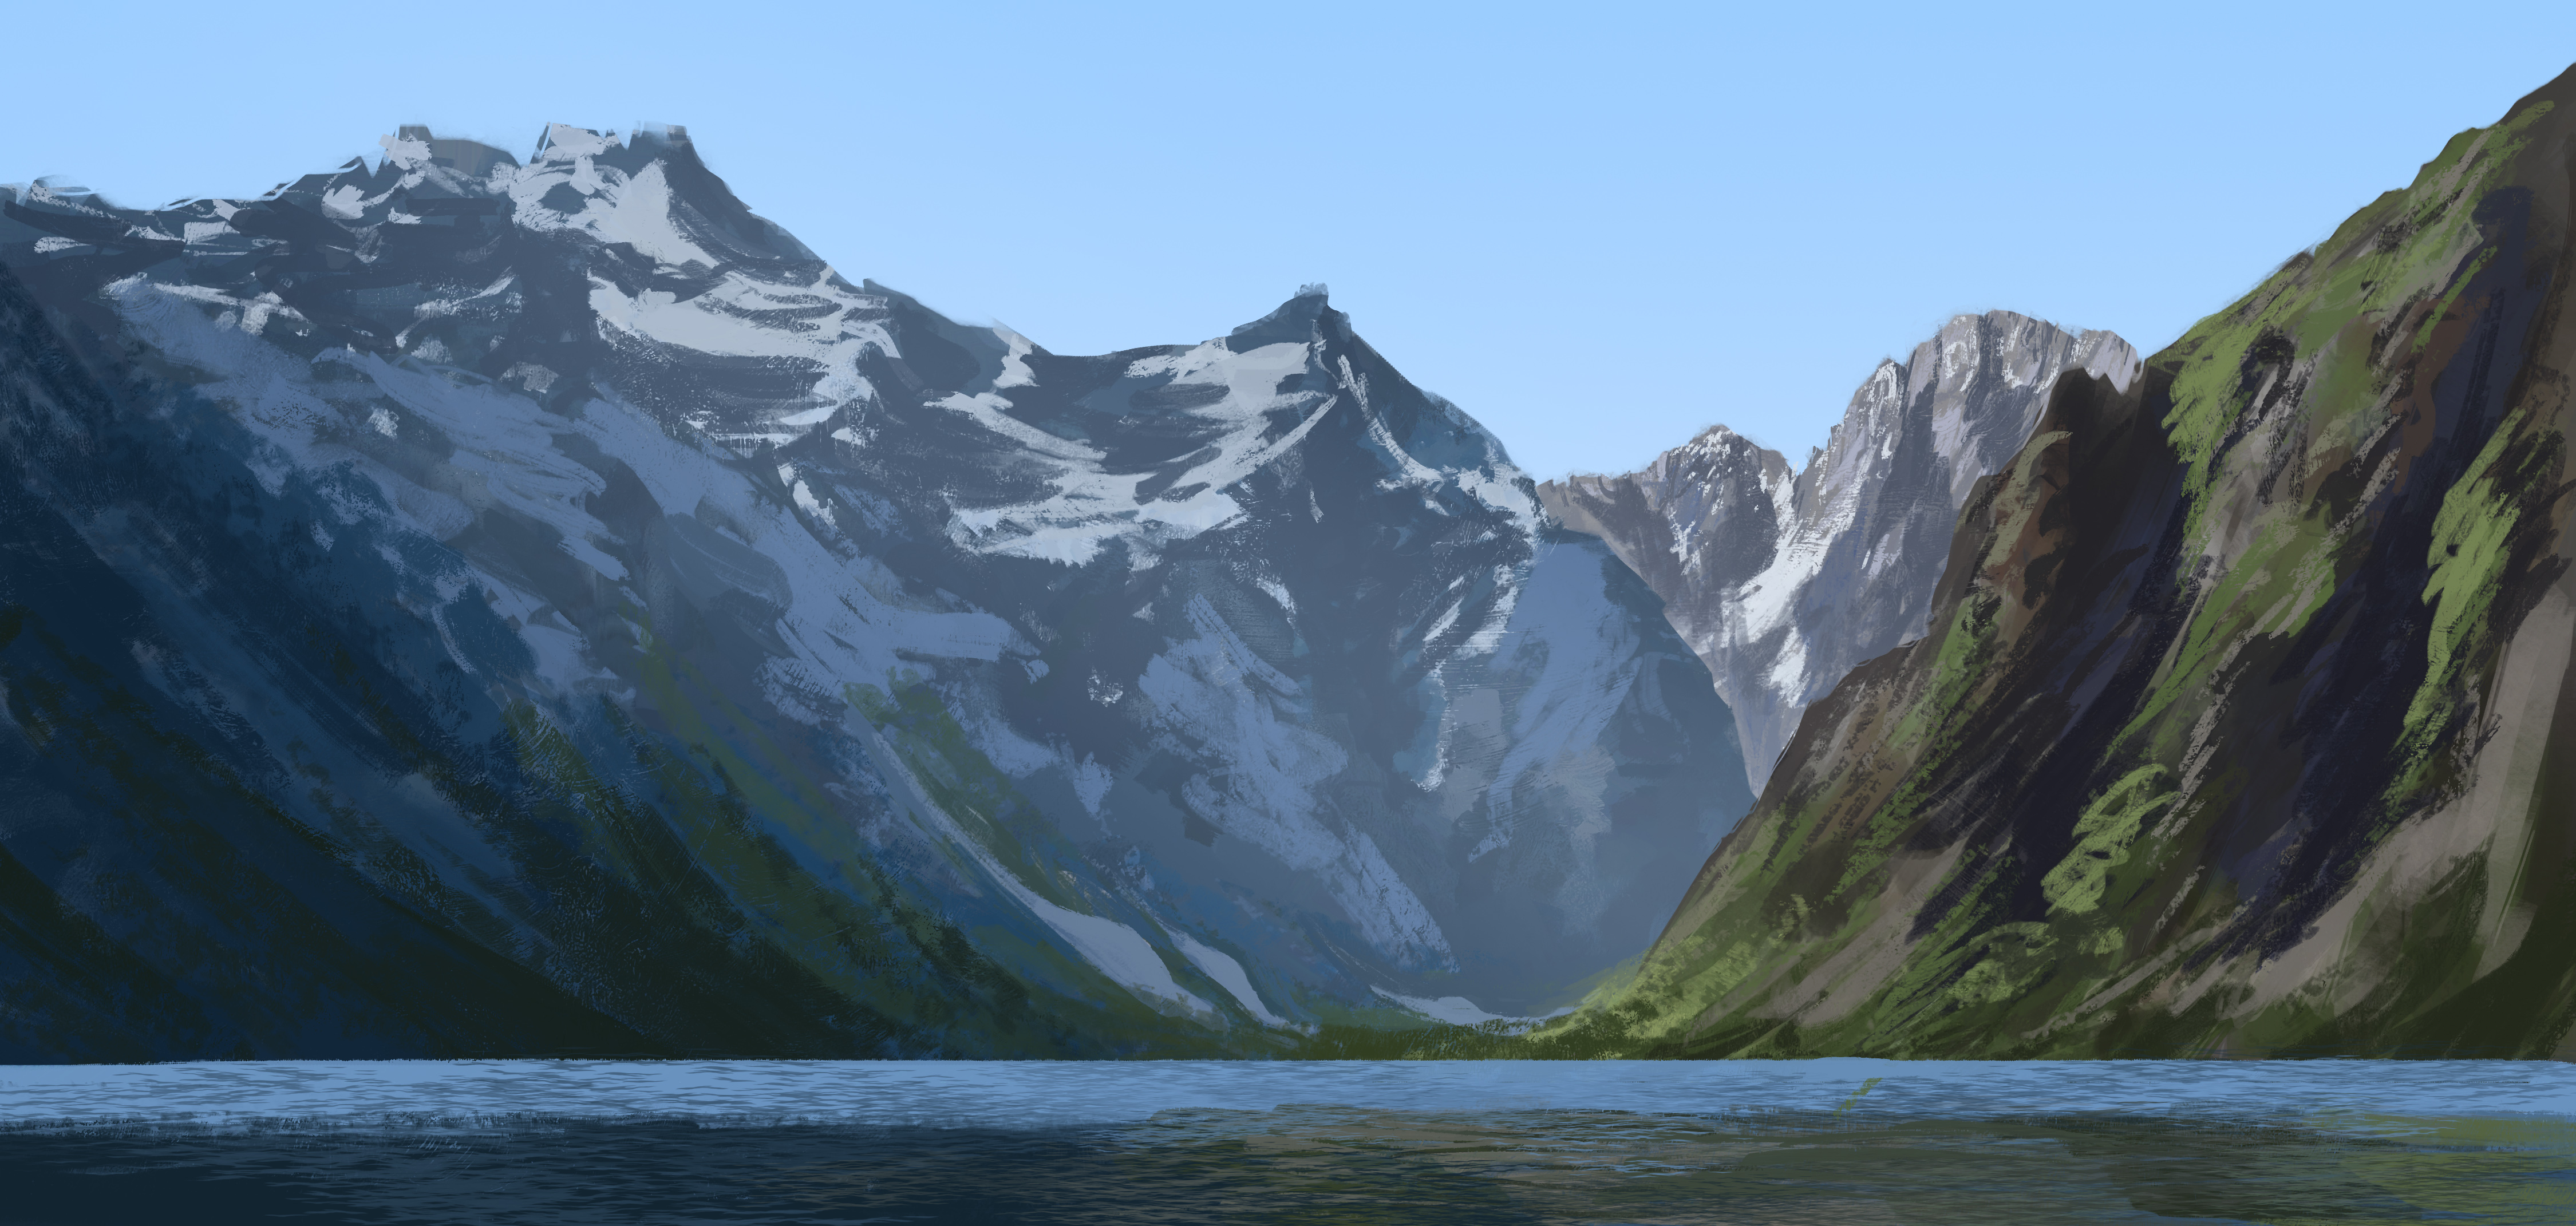 General 4500x2142 digital painting New Zealand mountains lake landscape RuefulRaptor artwork nature water